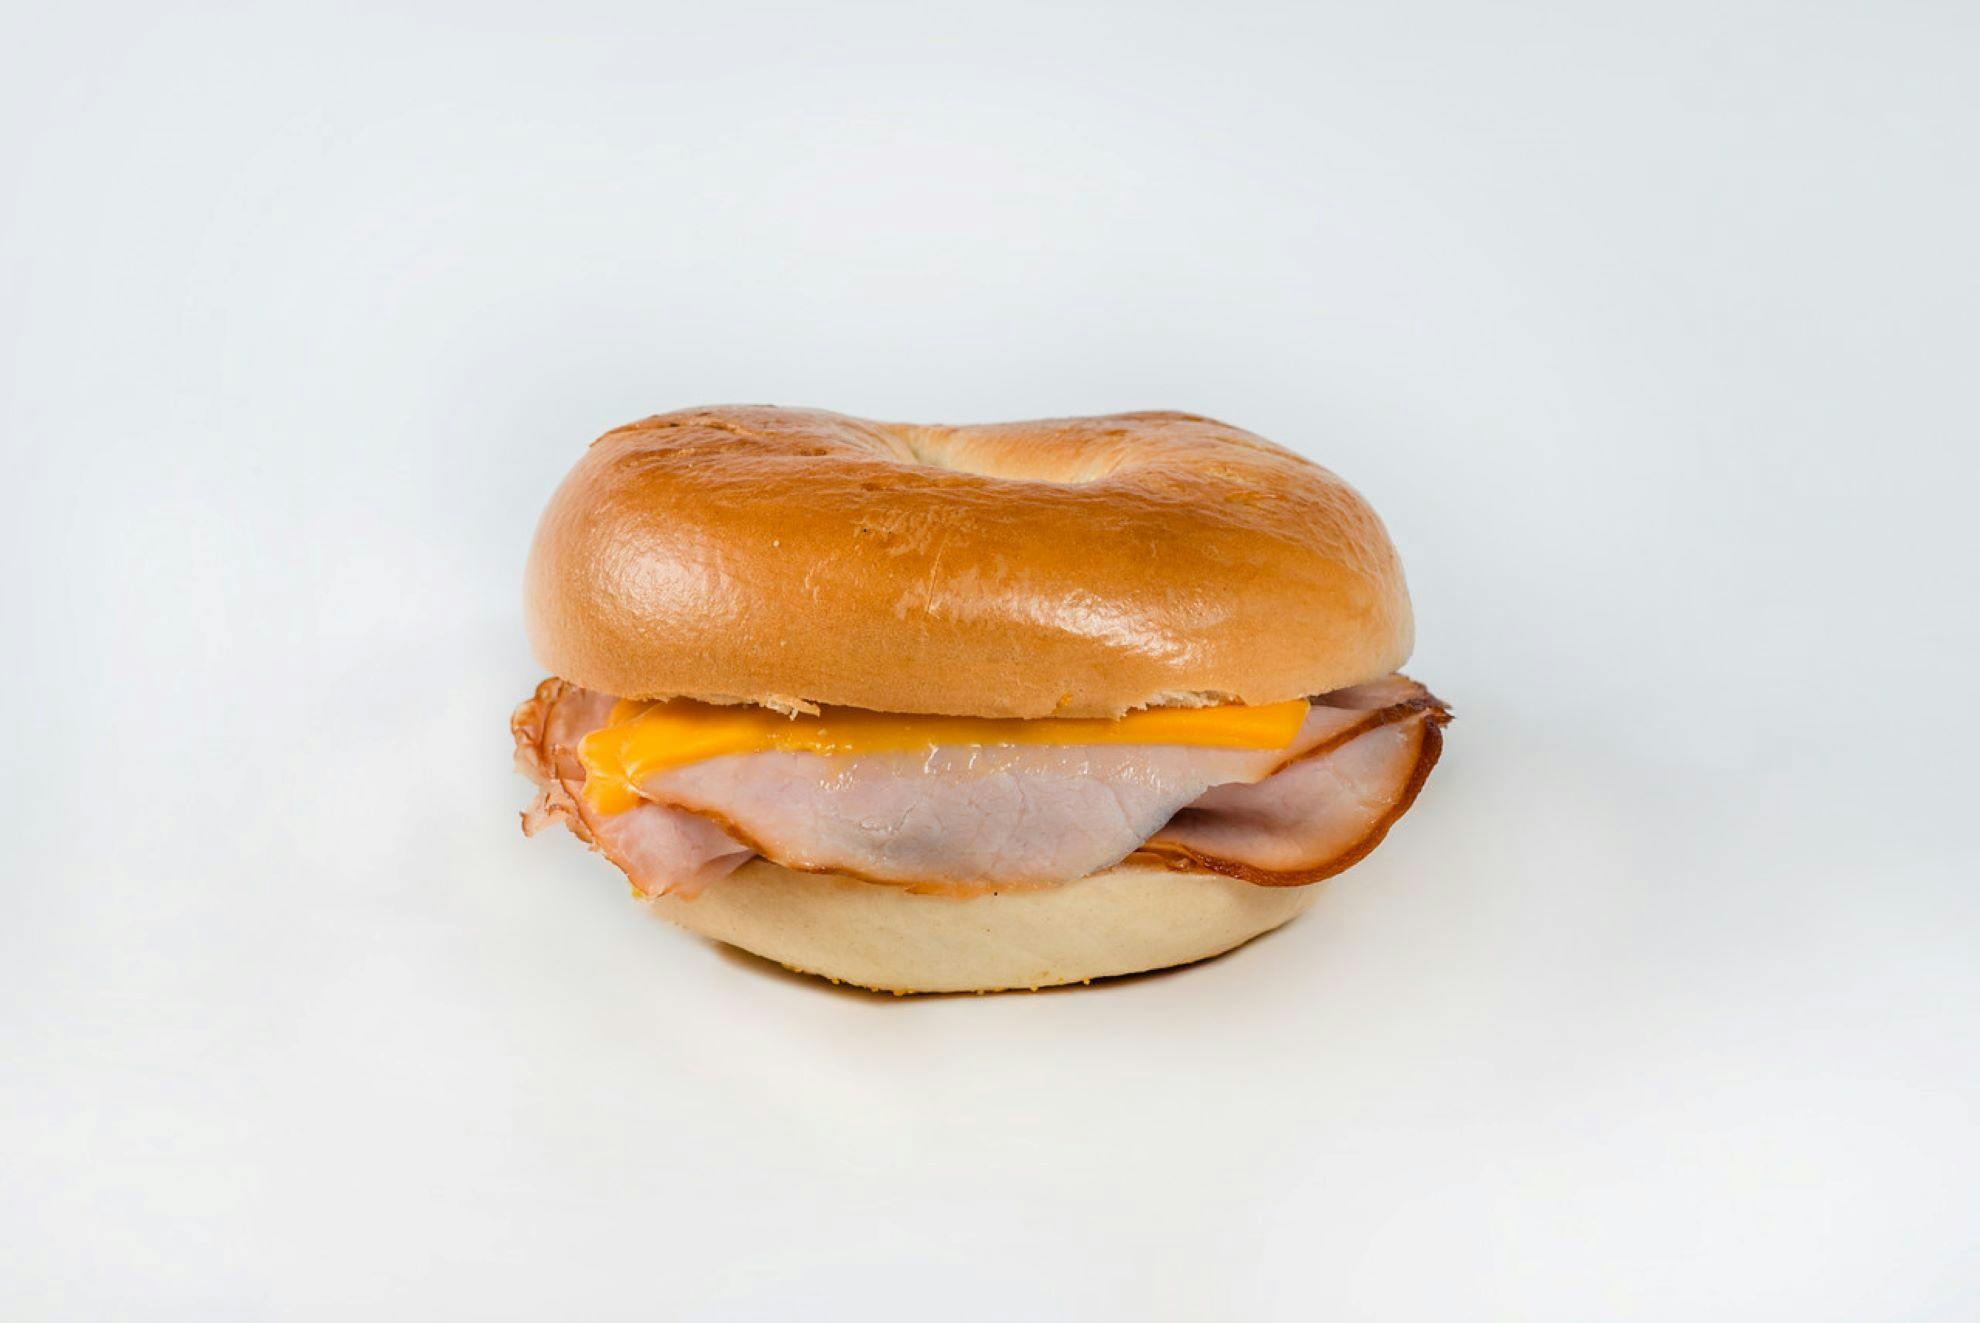 Montauk Point Bagel Sandwich from Gandolfo's New York Deli - Pleasant Grove in Pleasant Grove, UT